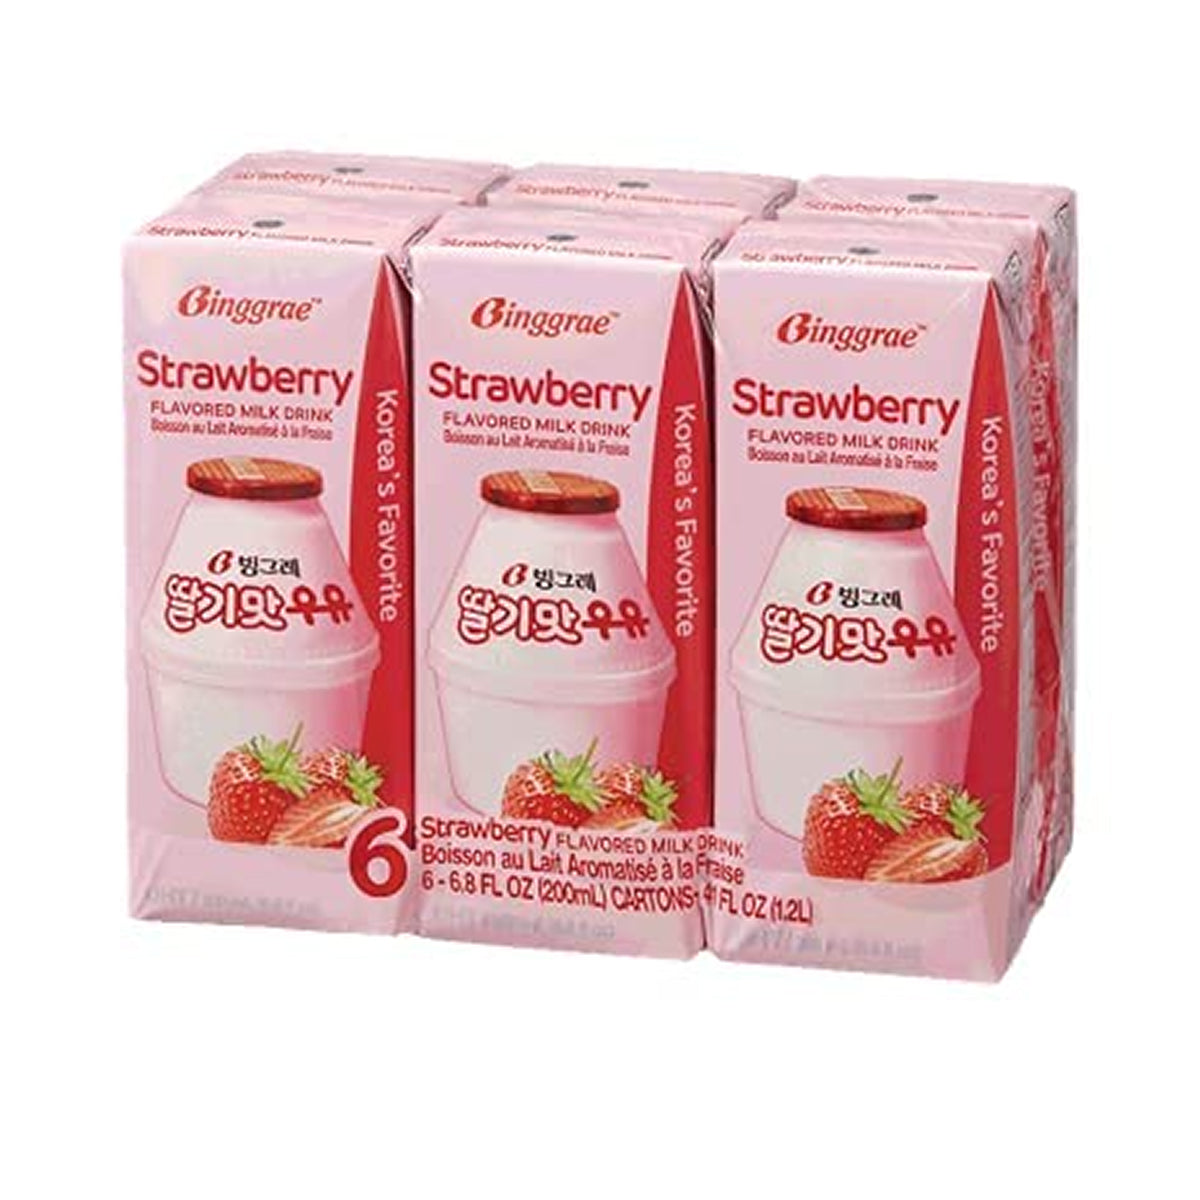 binggrae strawberry flavored milk drink - 6pk 200ml